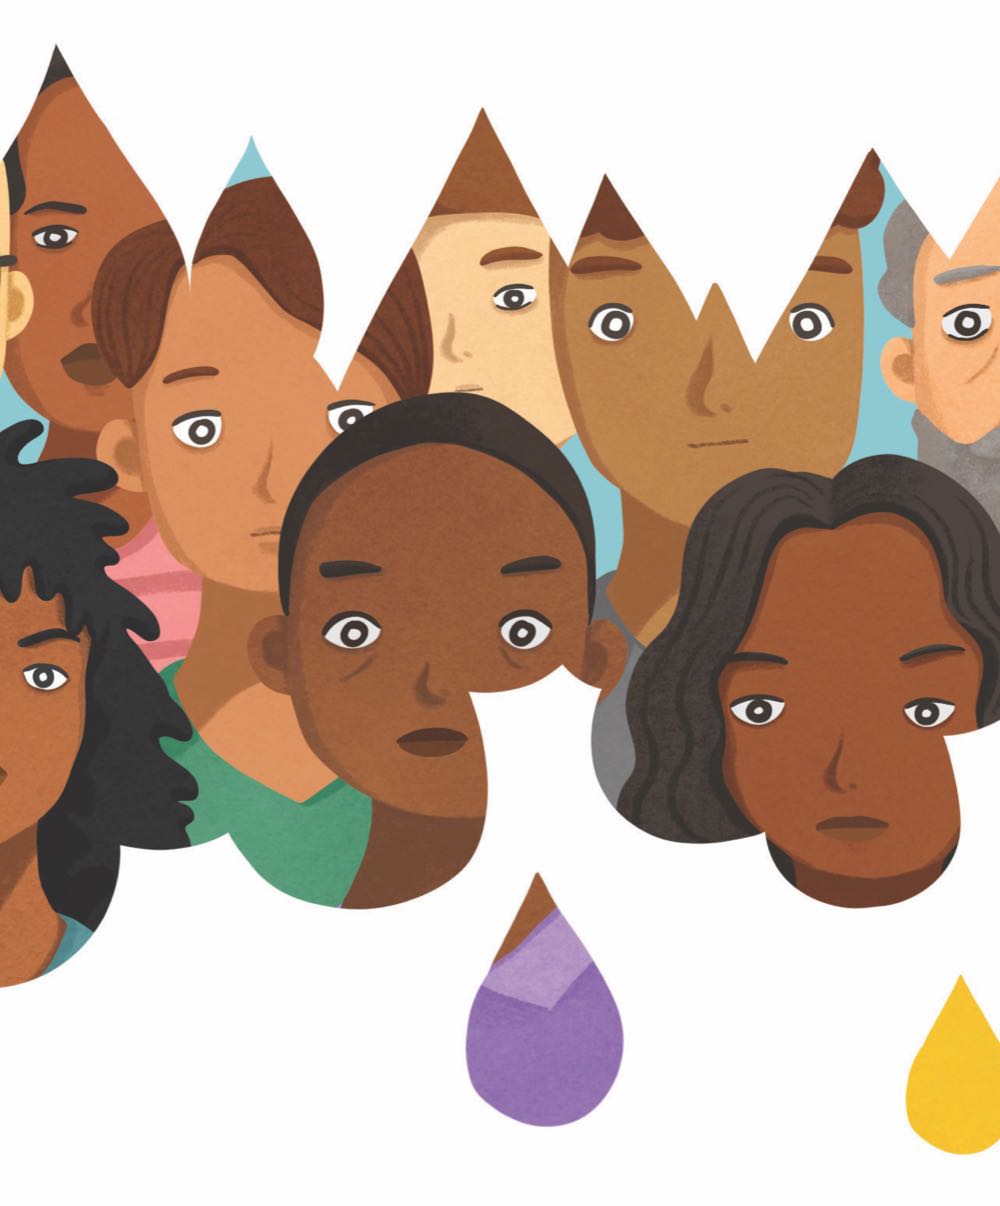 An illustration of people inside tear drop shapes